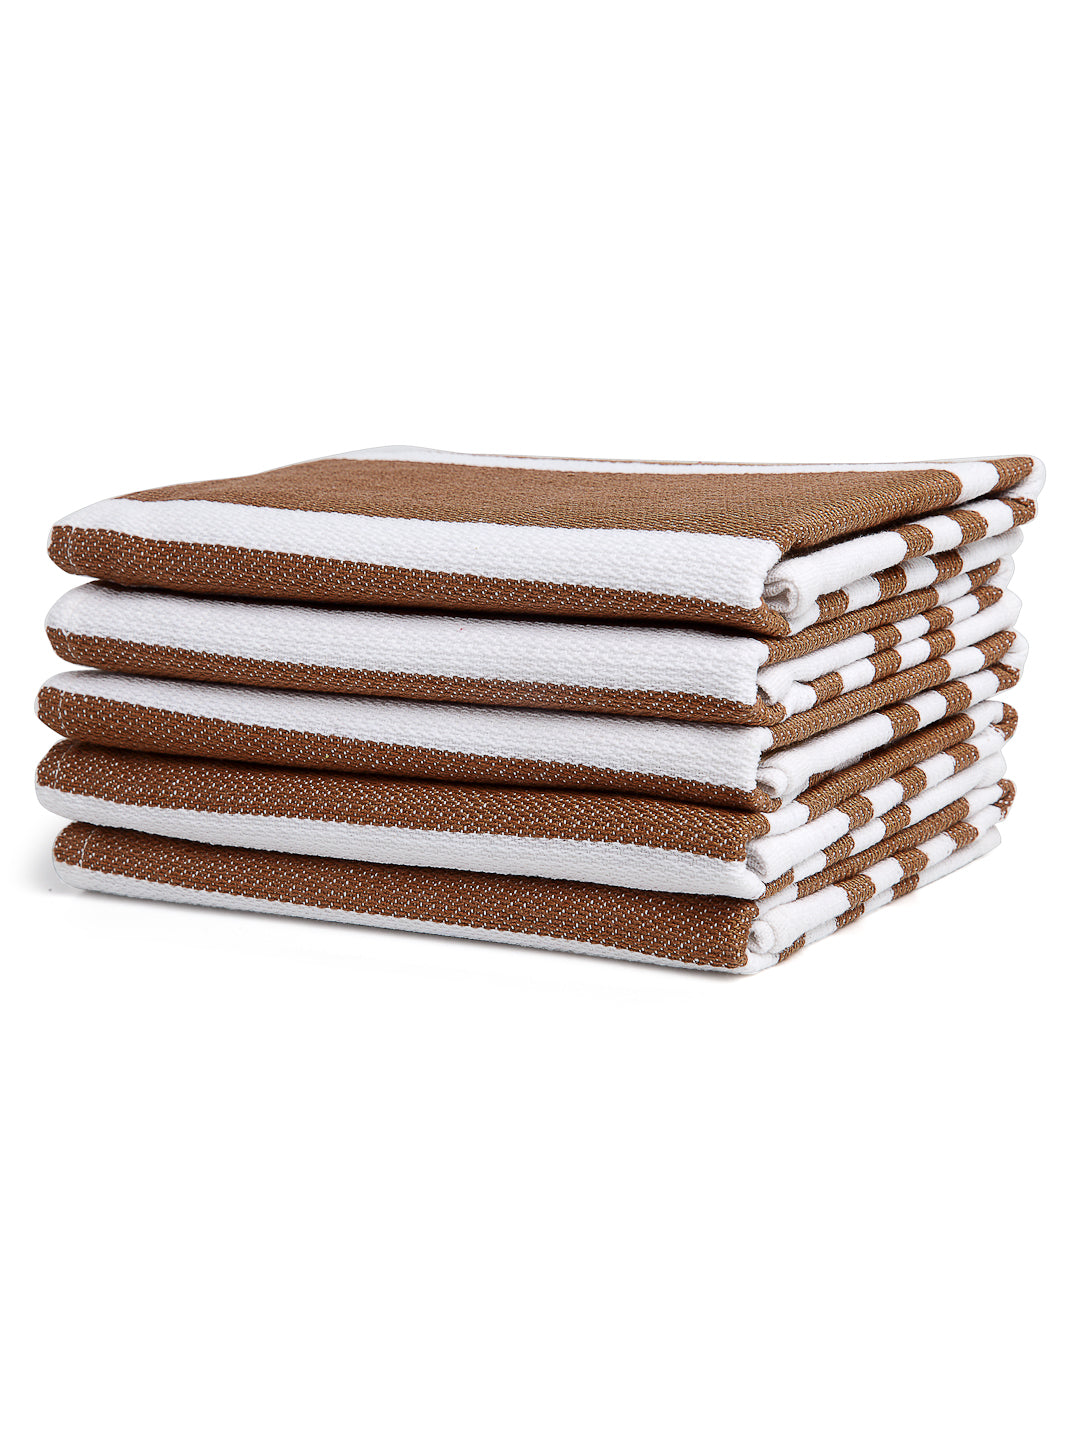 Arrabi Brown Stripes Handwoven Cotton Hand Towel (Set of 5) (85 X 35 cm)